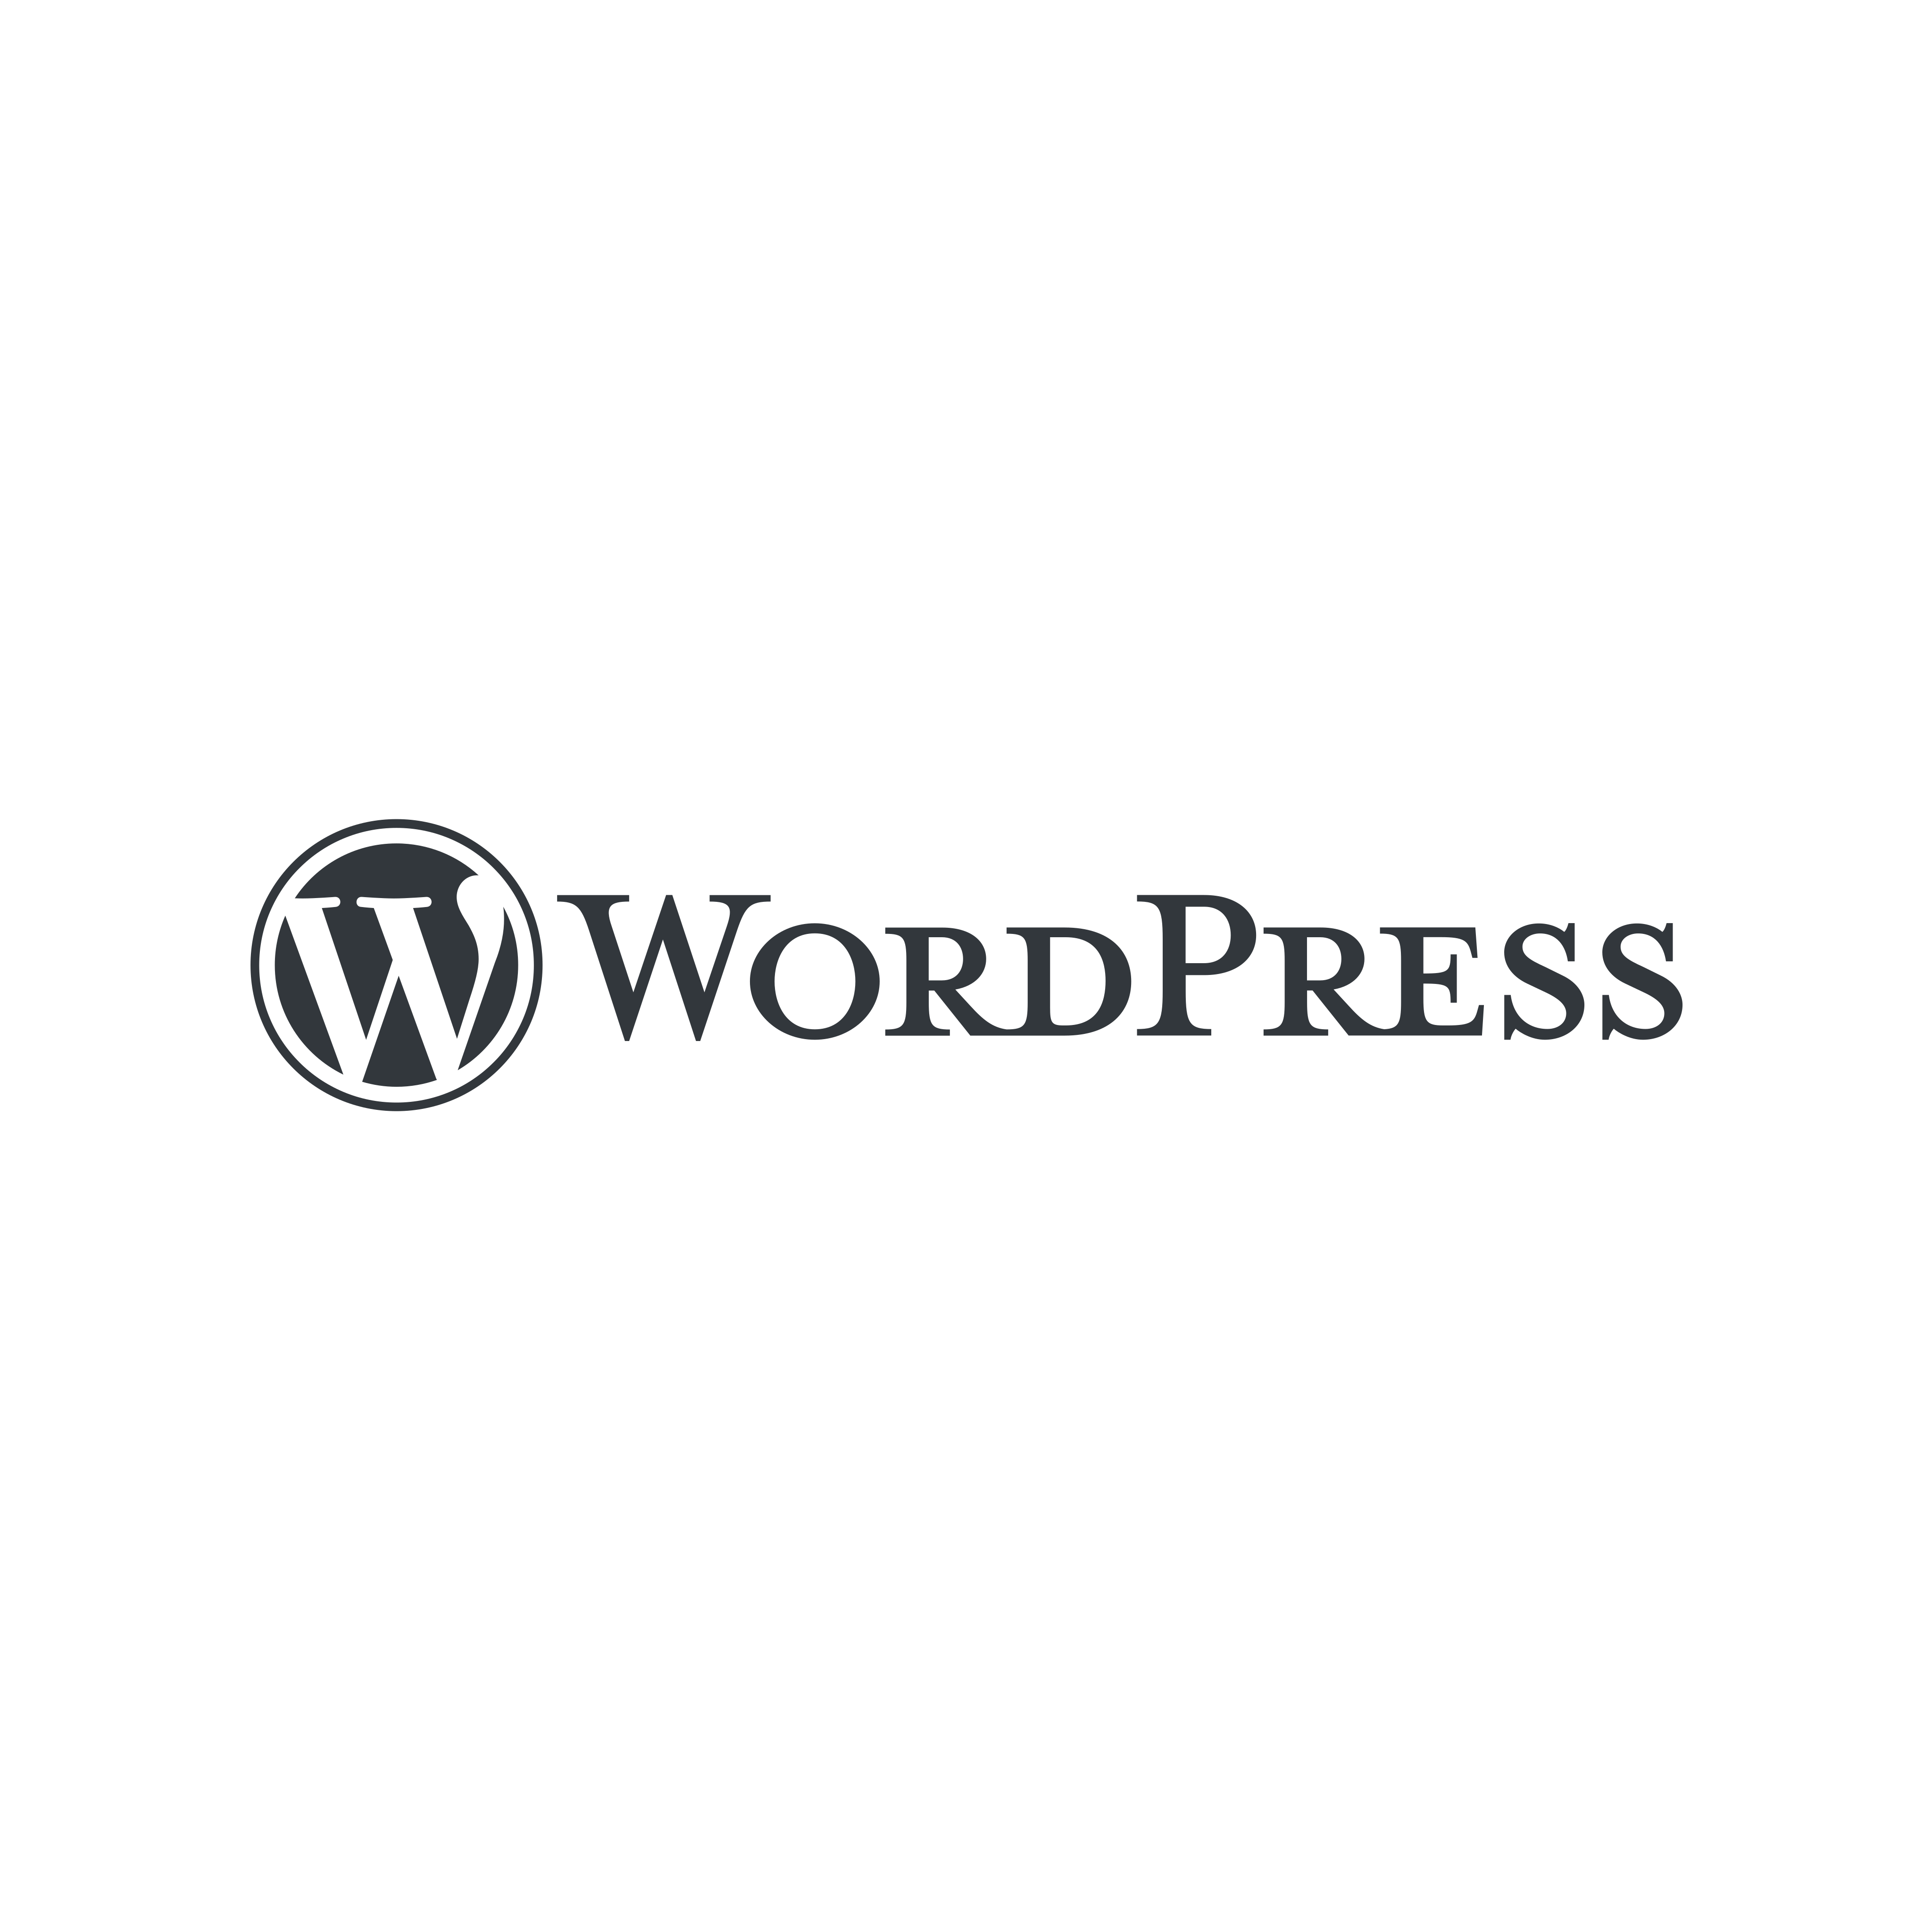 Wordpress Logo PNG in Transparent pngteam.com